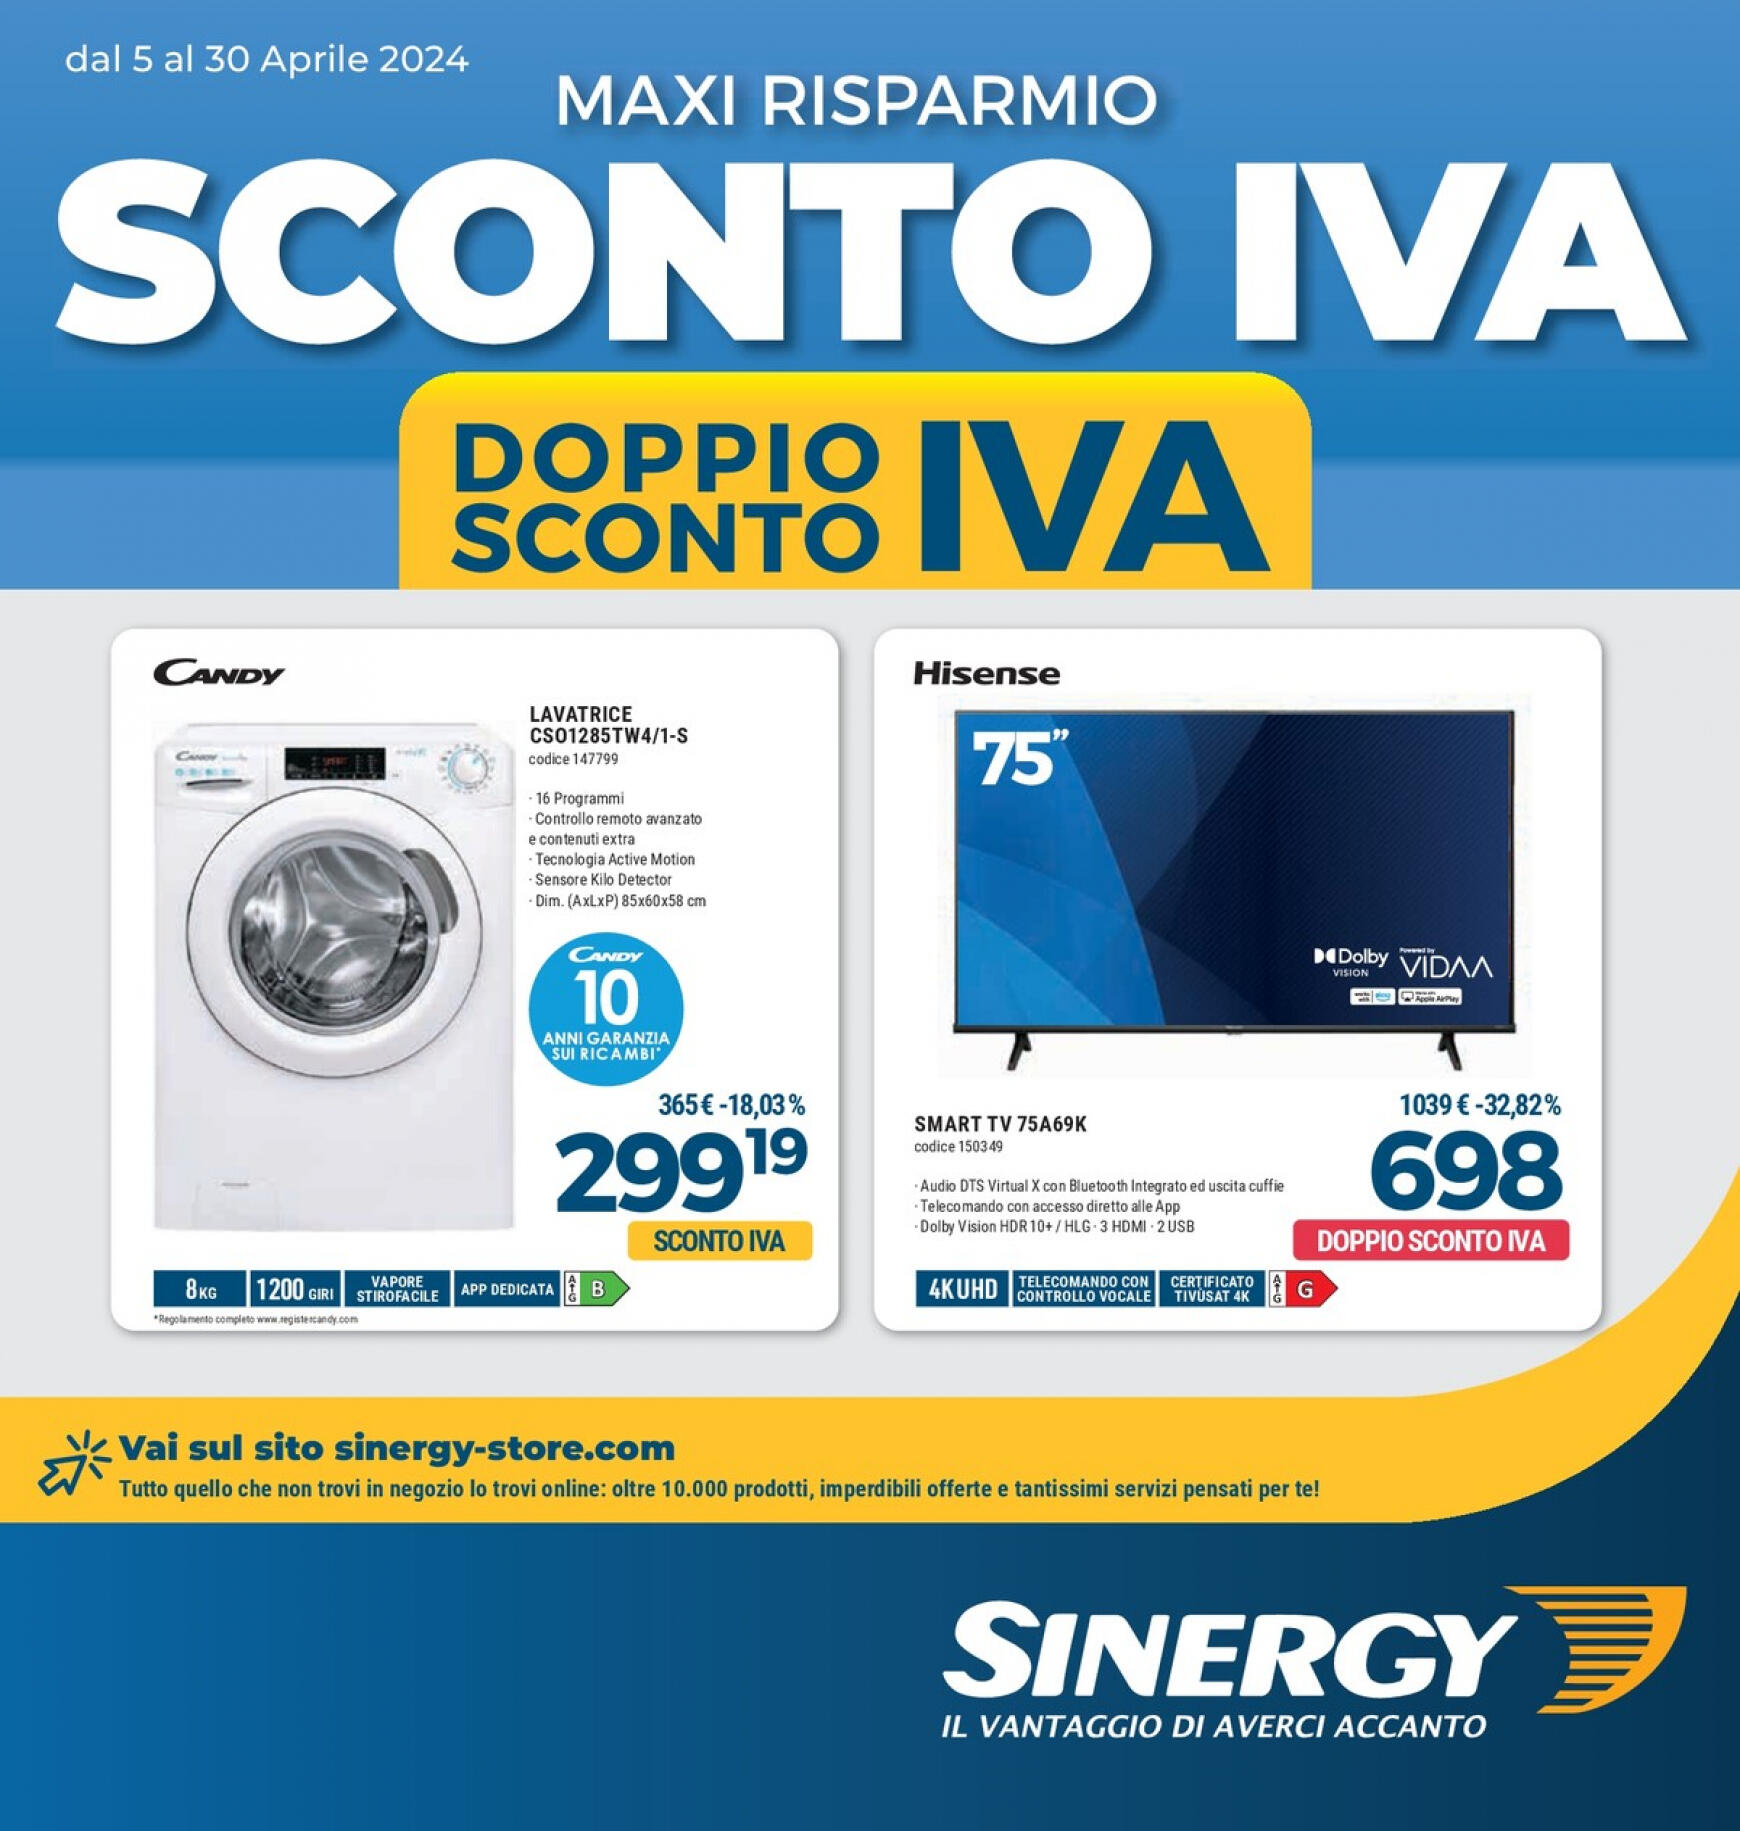 sinergy - Nuovo volantino Sinergy 05.04. - 30.04.